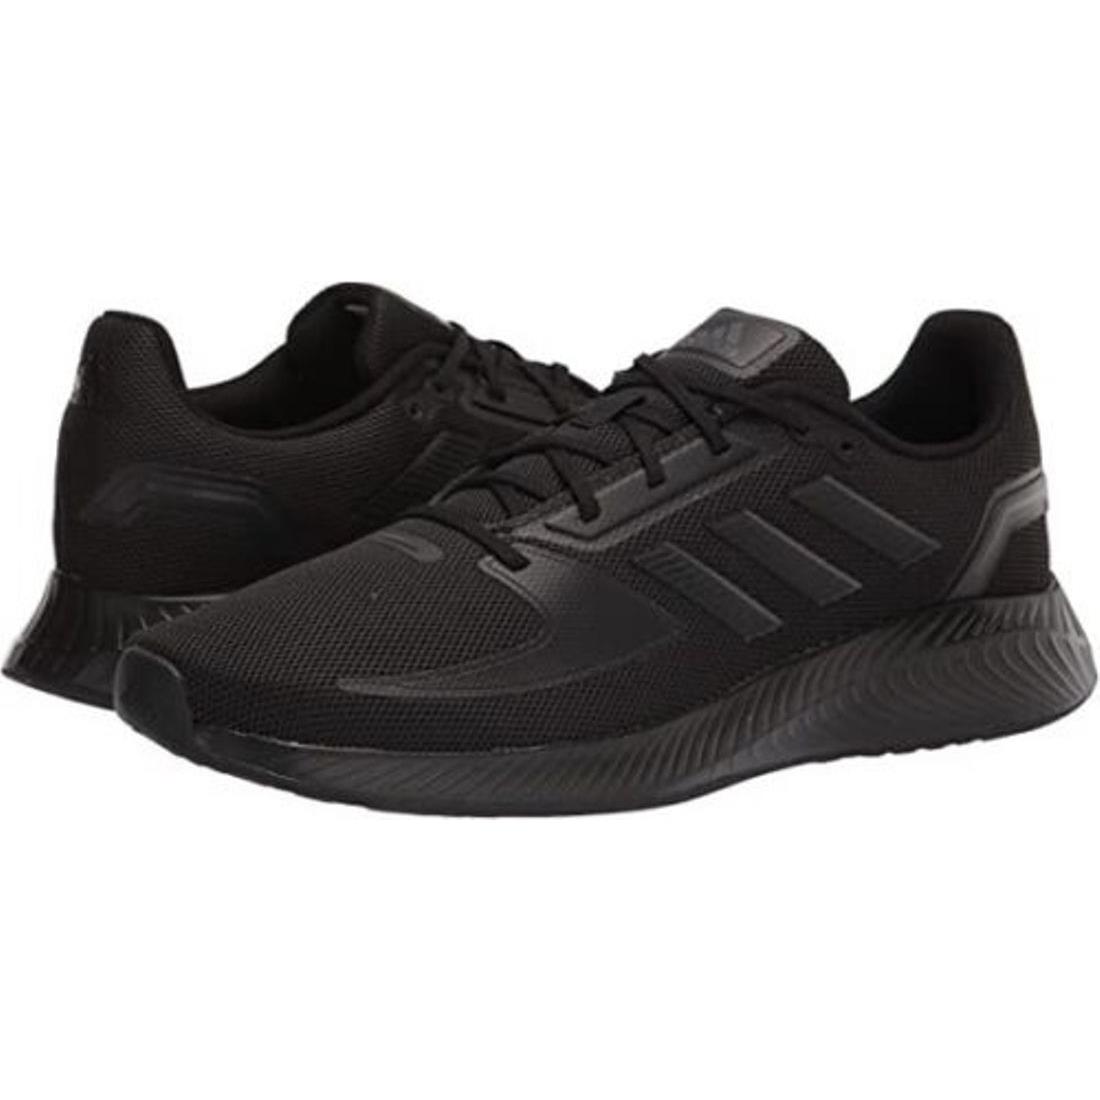 Man Adidas Runfalcon 2.0 Running Lace Up Shoe G58096 Color Black/gray - Black/Gray